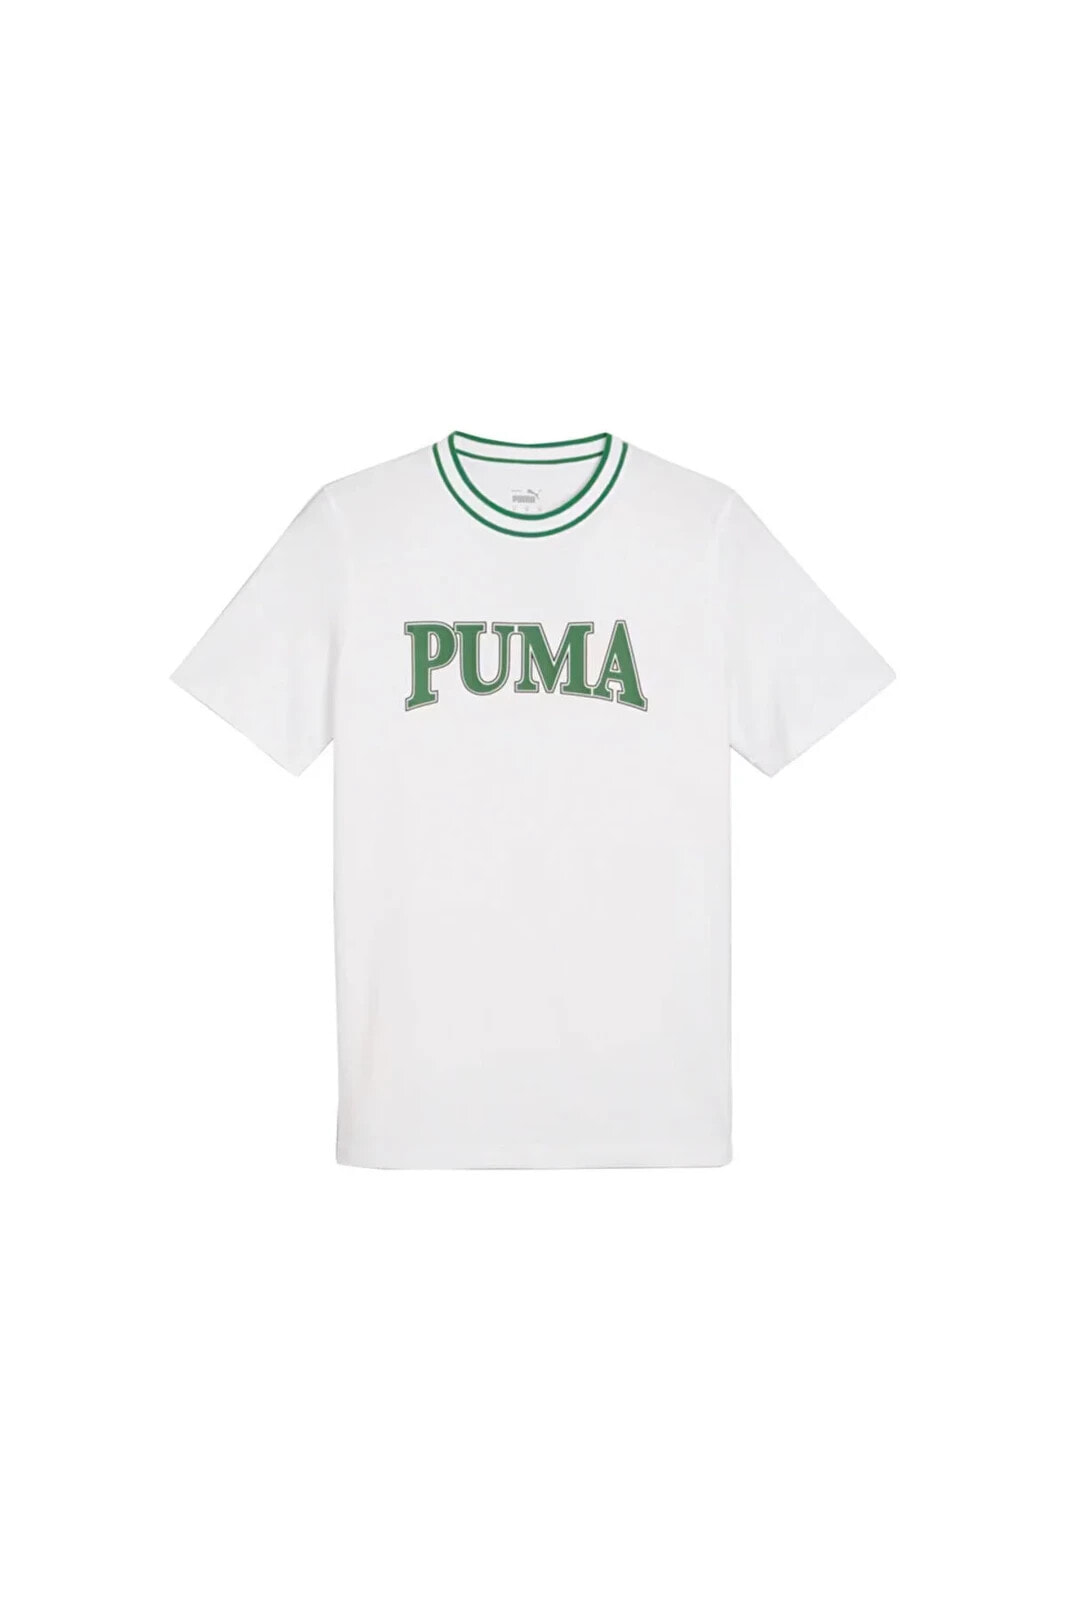 Puma Squad Graphic Tee Erkek Günlük Tişört 67896753 Beyaz